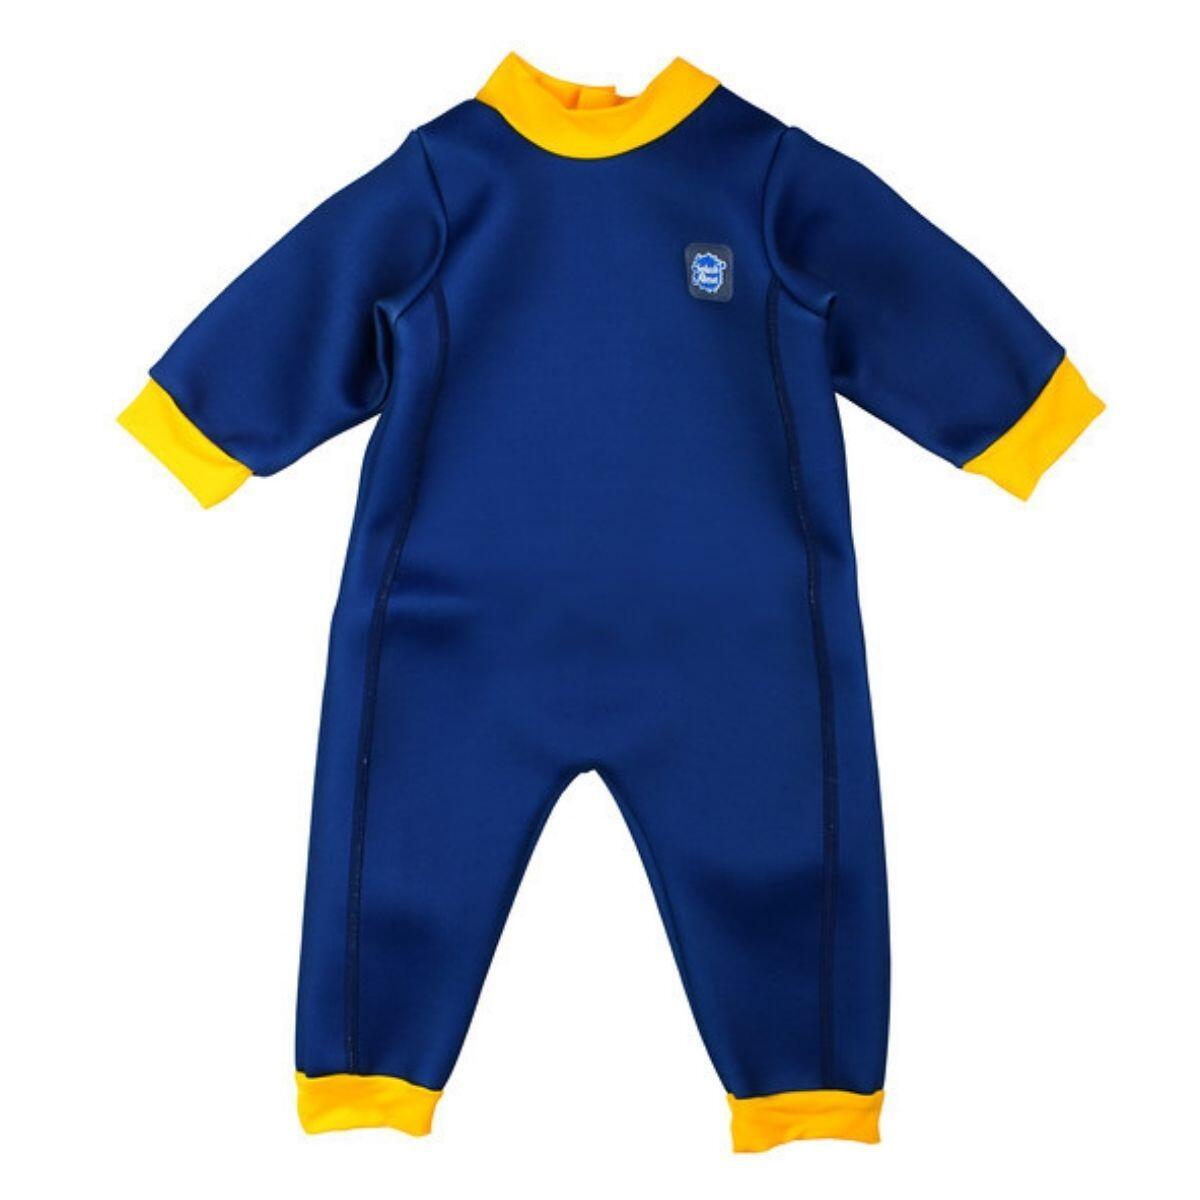 SPLASH ABOUT Splash About Warm in One Baby Wetsuit, Navy & Yellow